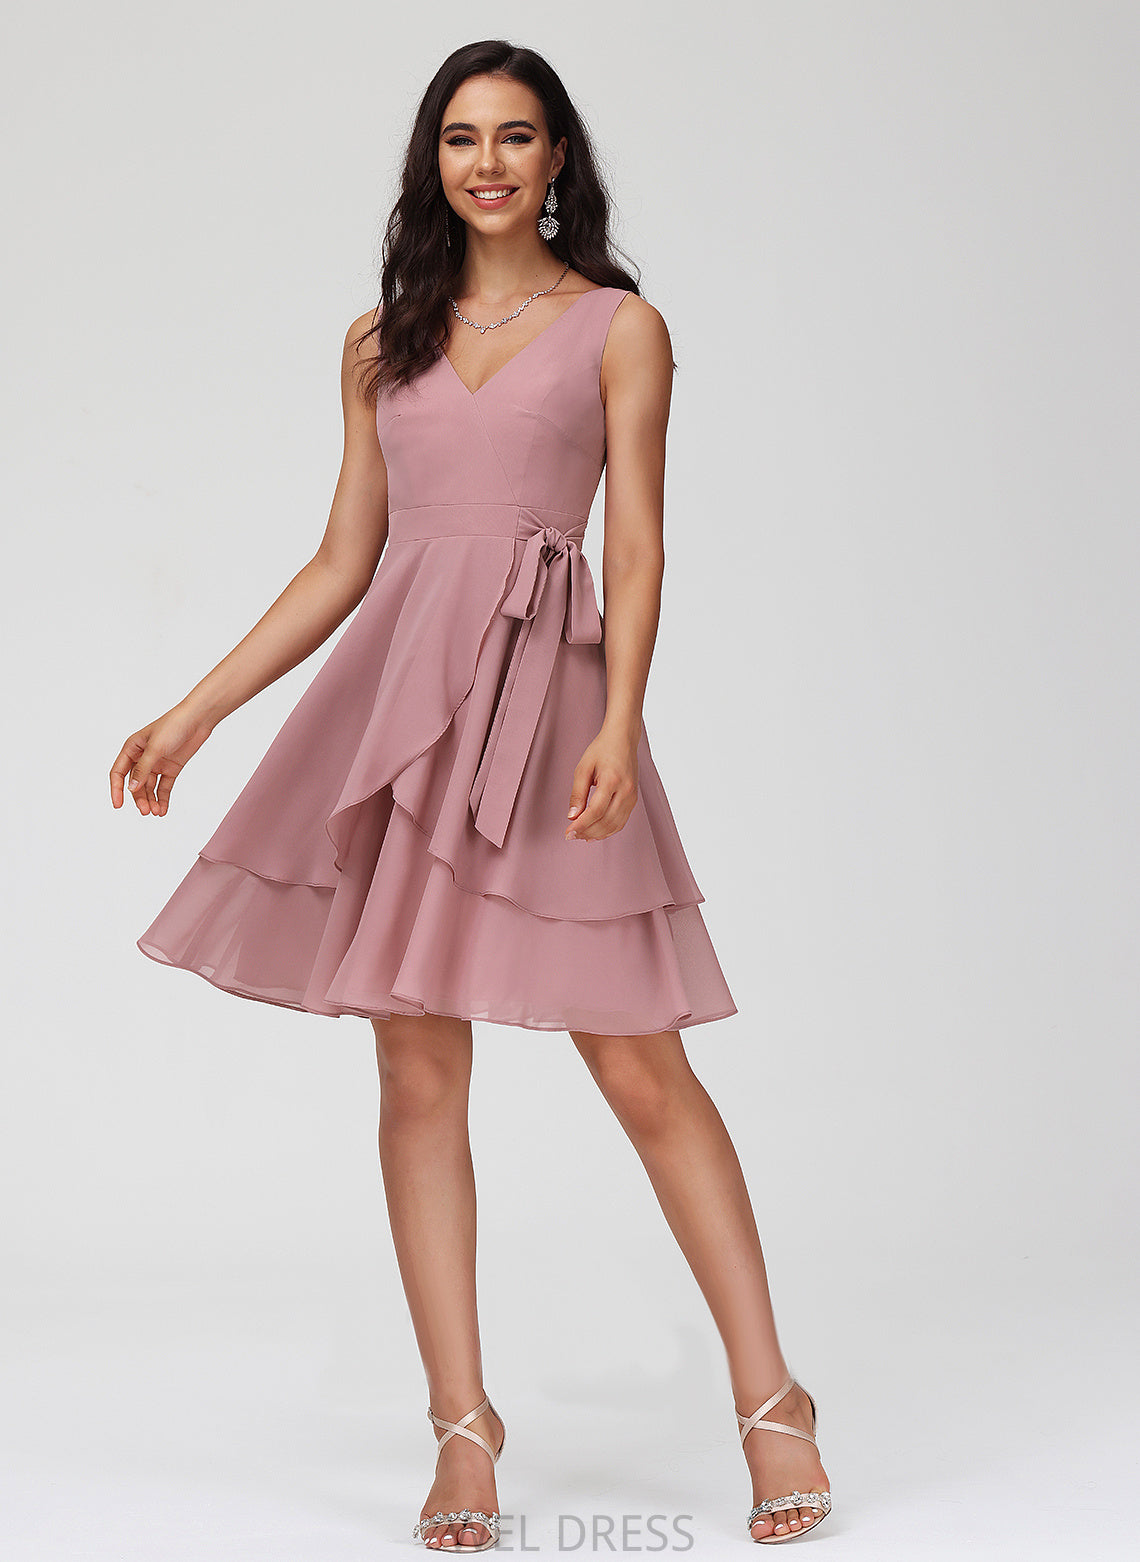 Short/Mini V-neck Kristen Chiffon Homecoming Dresses Ruffle Dress Homecoming With A-Line